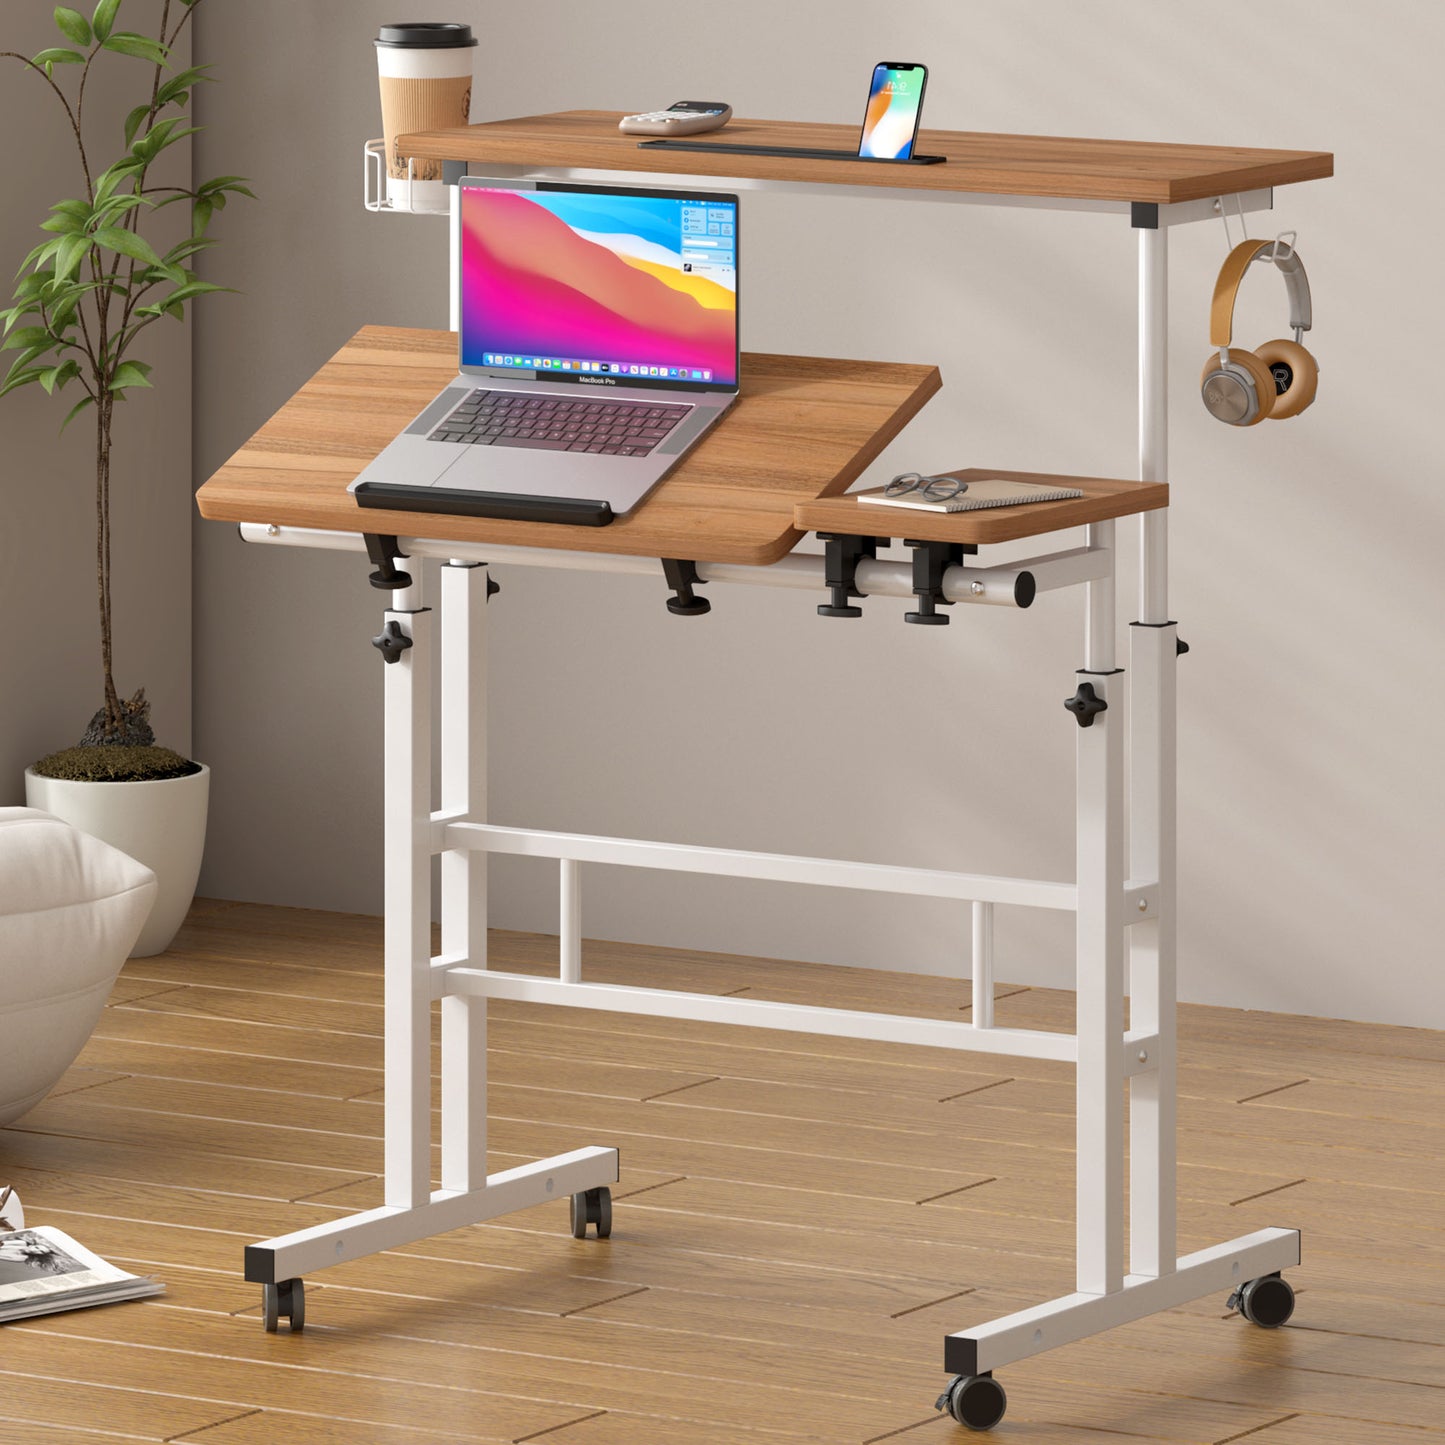 SogesPower Multifunctional Height Adjustable Computer&Writing Desk